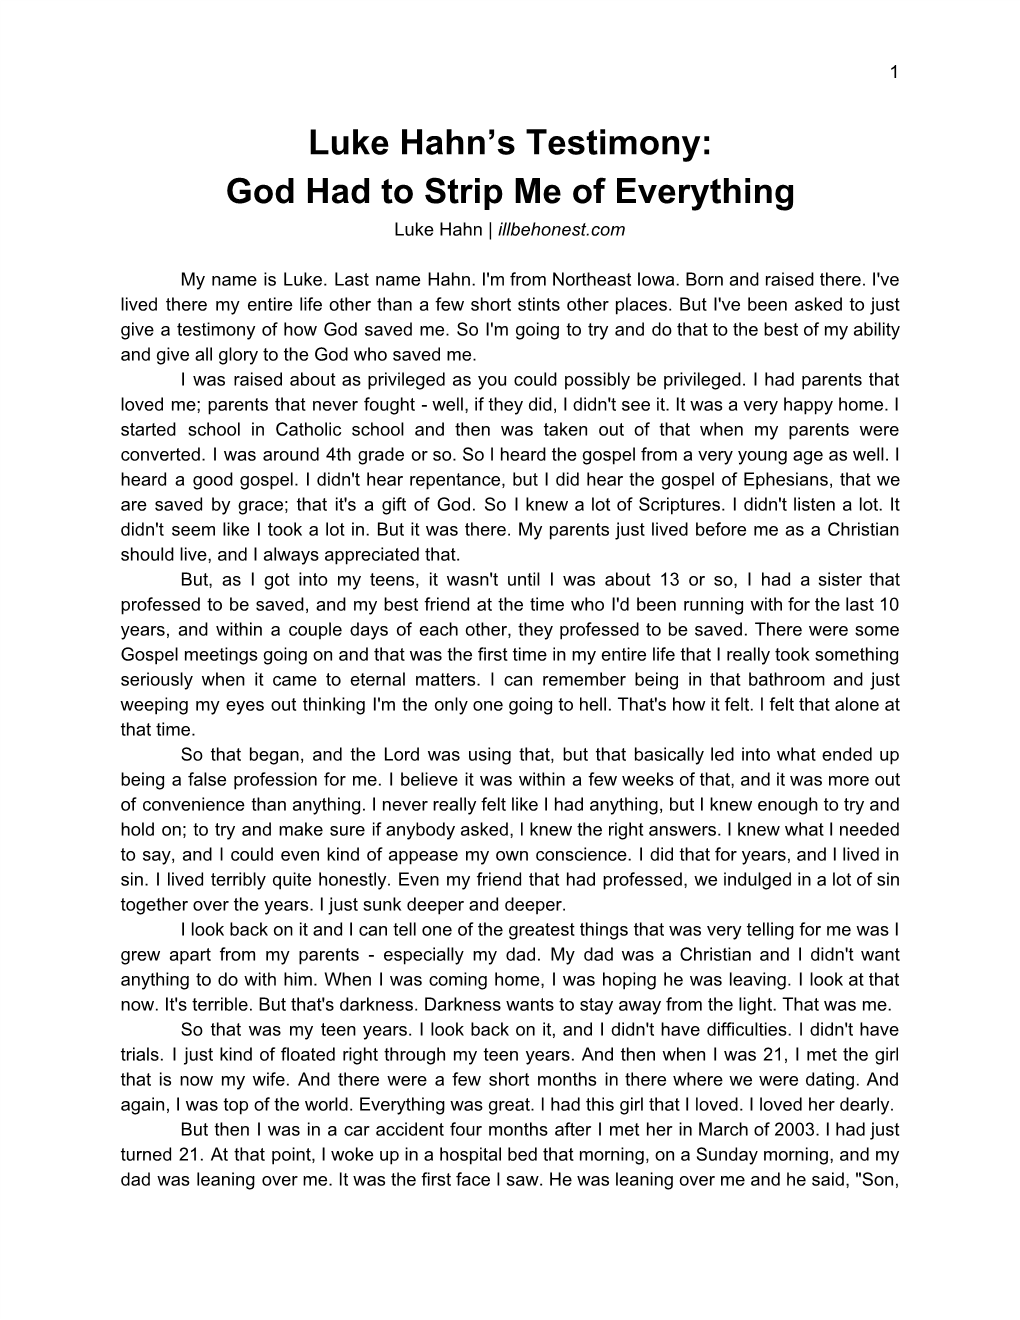 Luke Hahn's Testimony: God Had to Strip Me Of